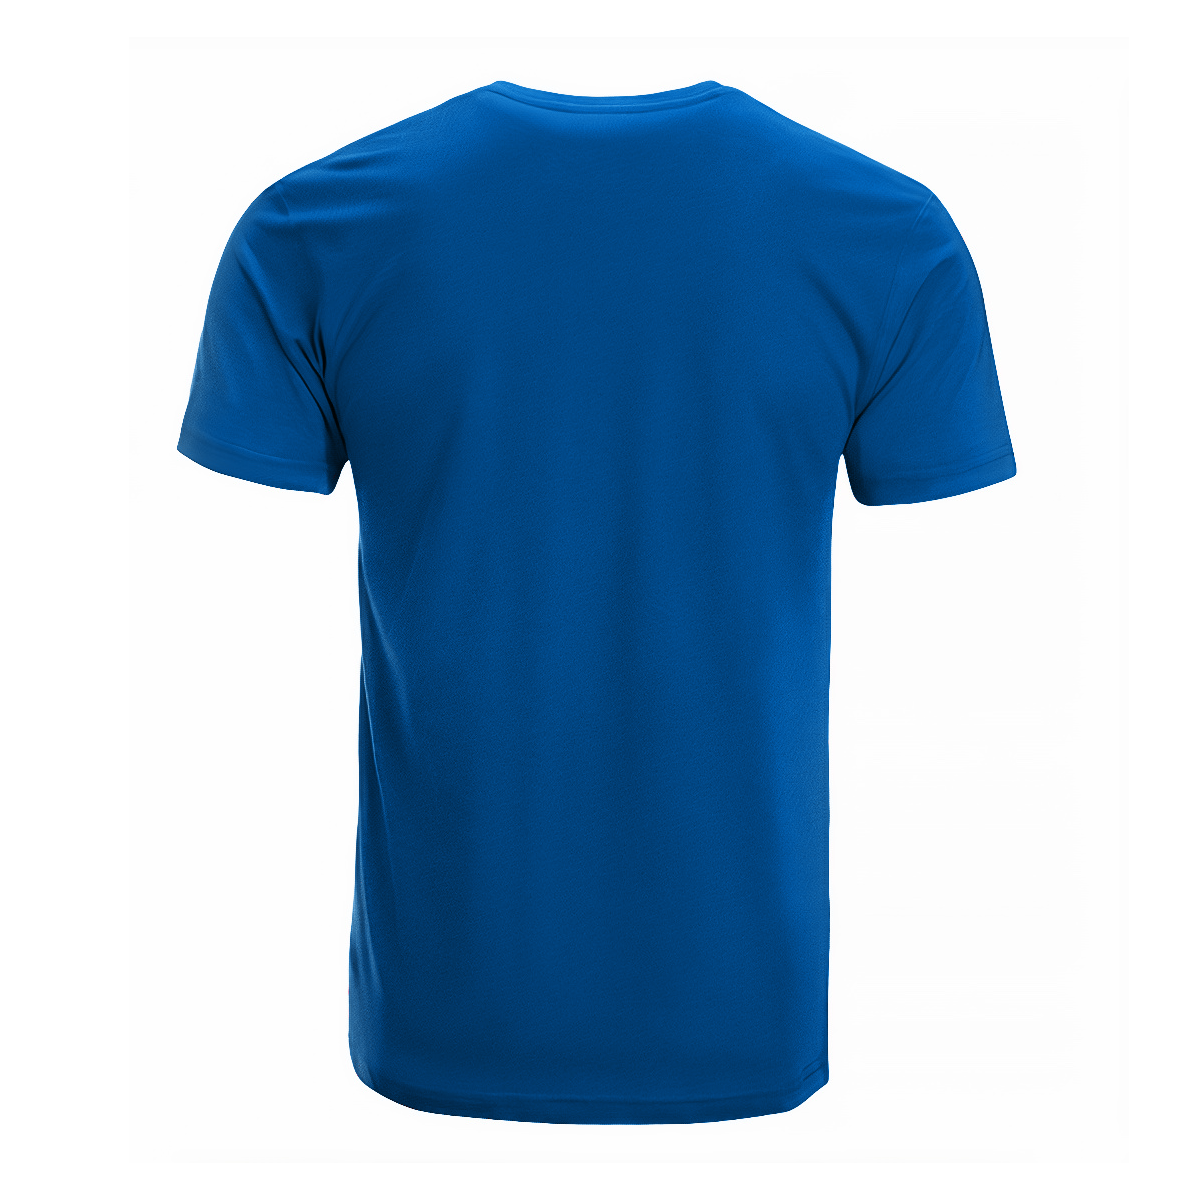 Pentland Tartan Crest T-shirt - I'm not yelling style